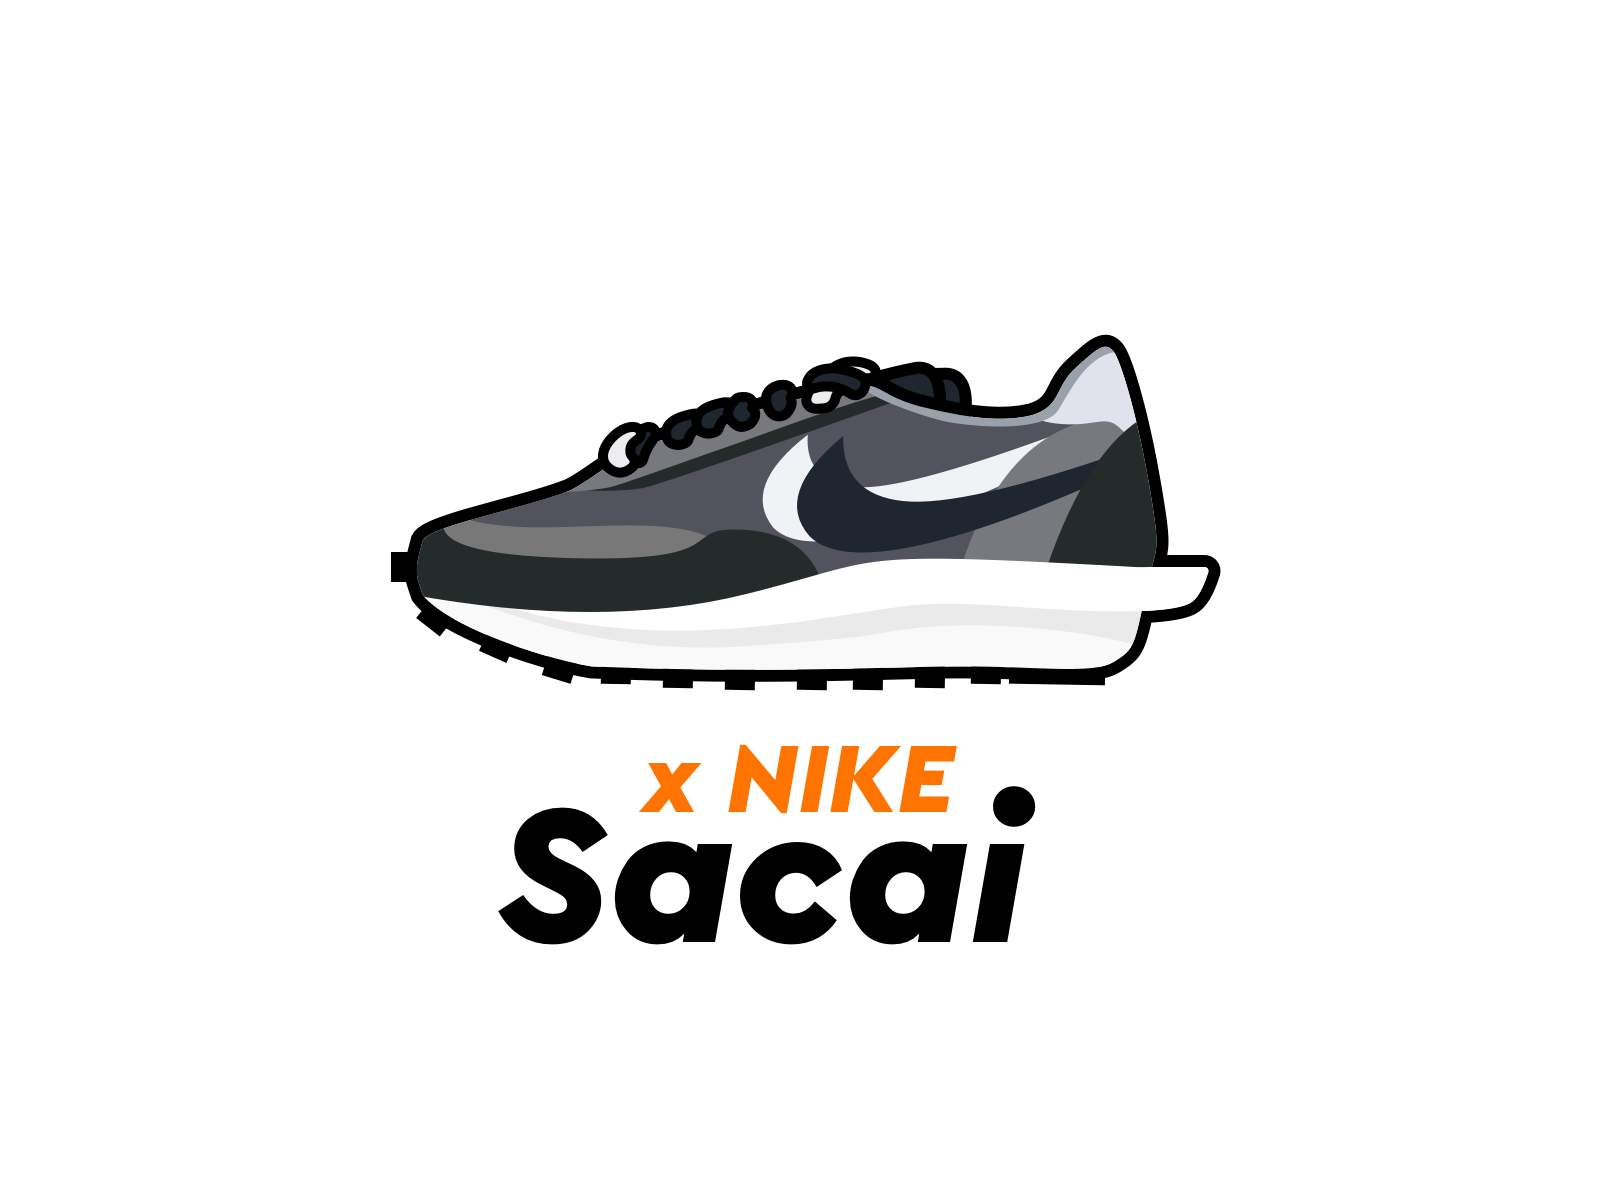 Nike x Sacai by Eaton on Dribbble